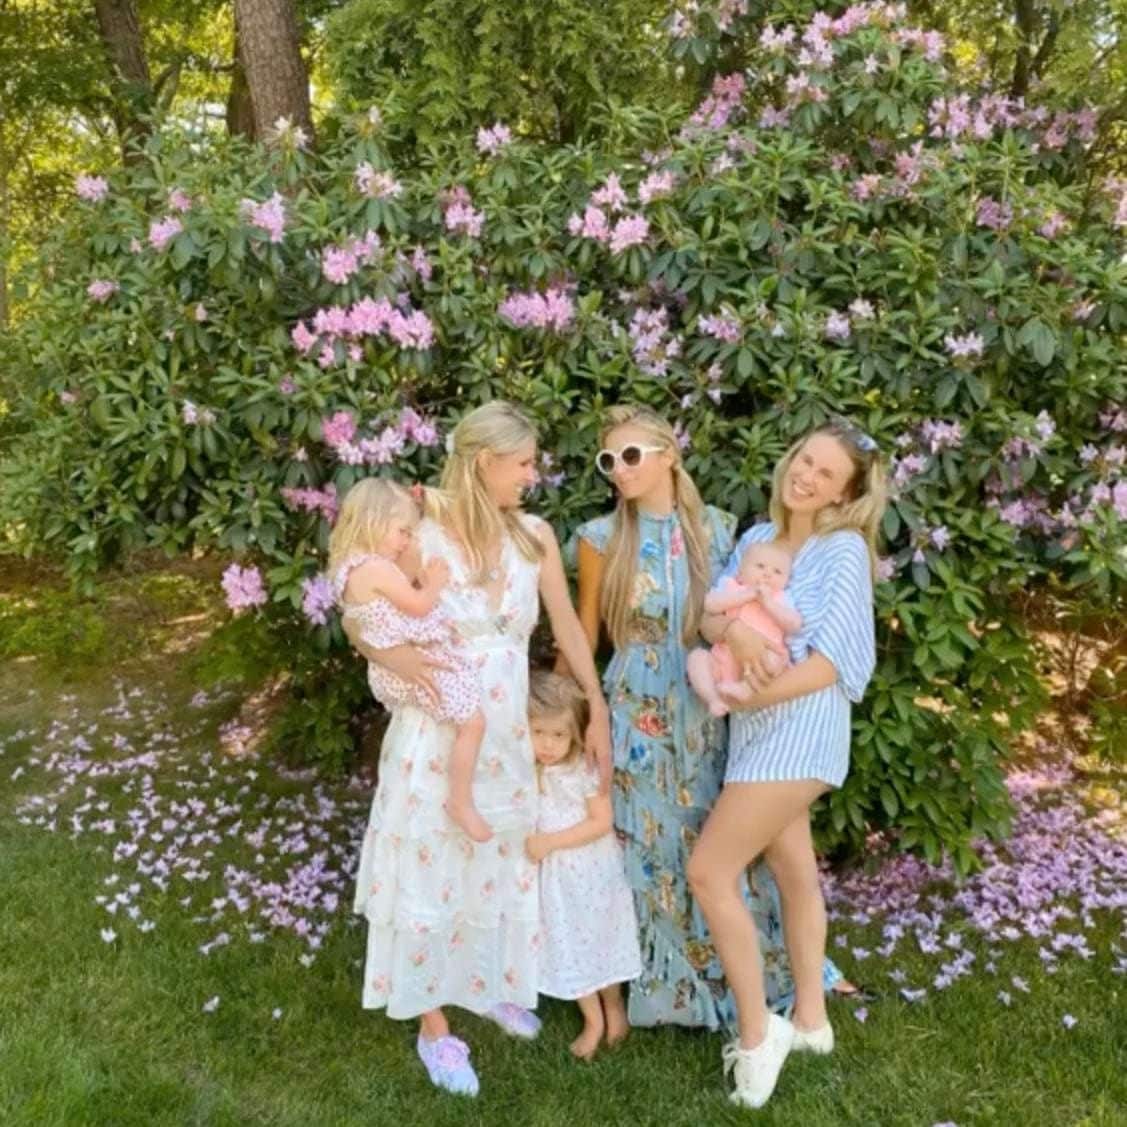 Paris Hilton reunites with family